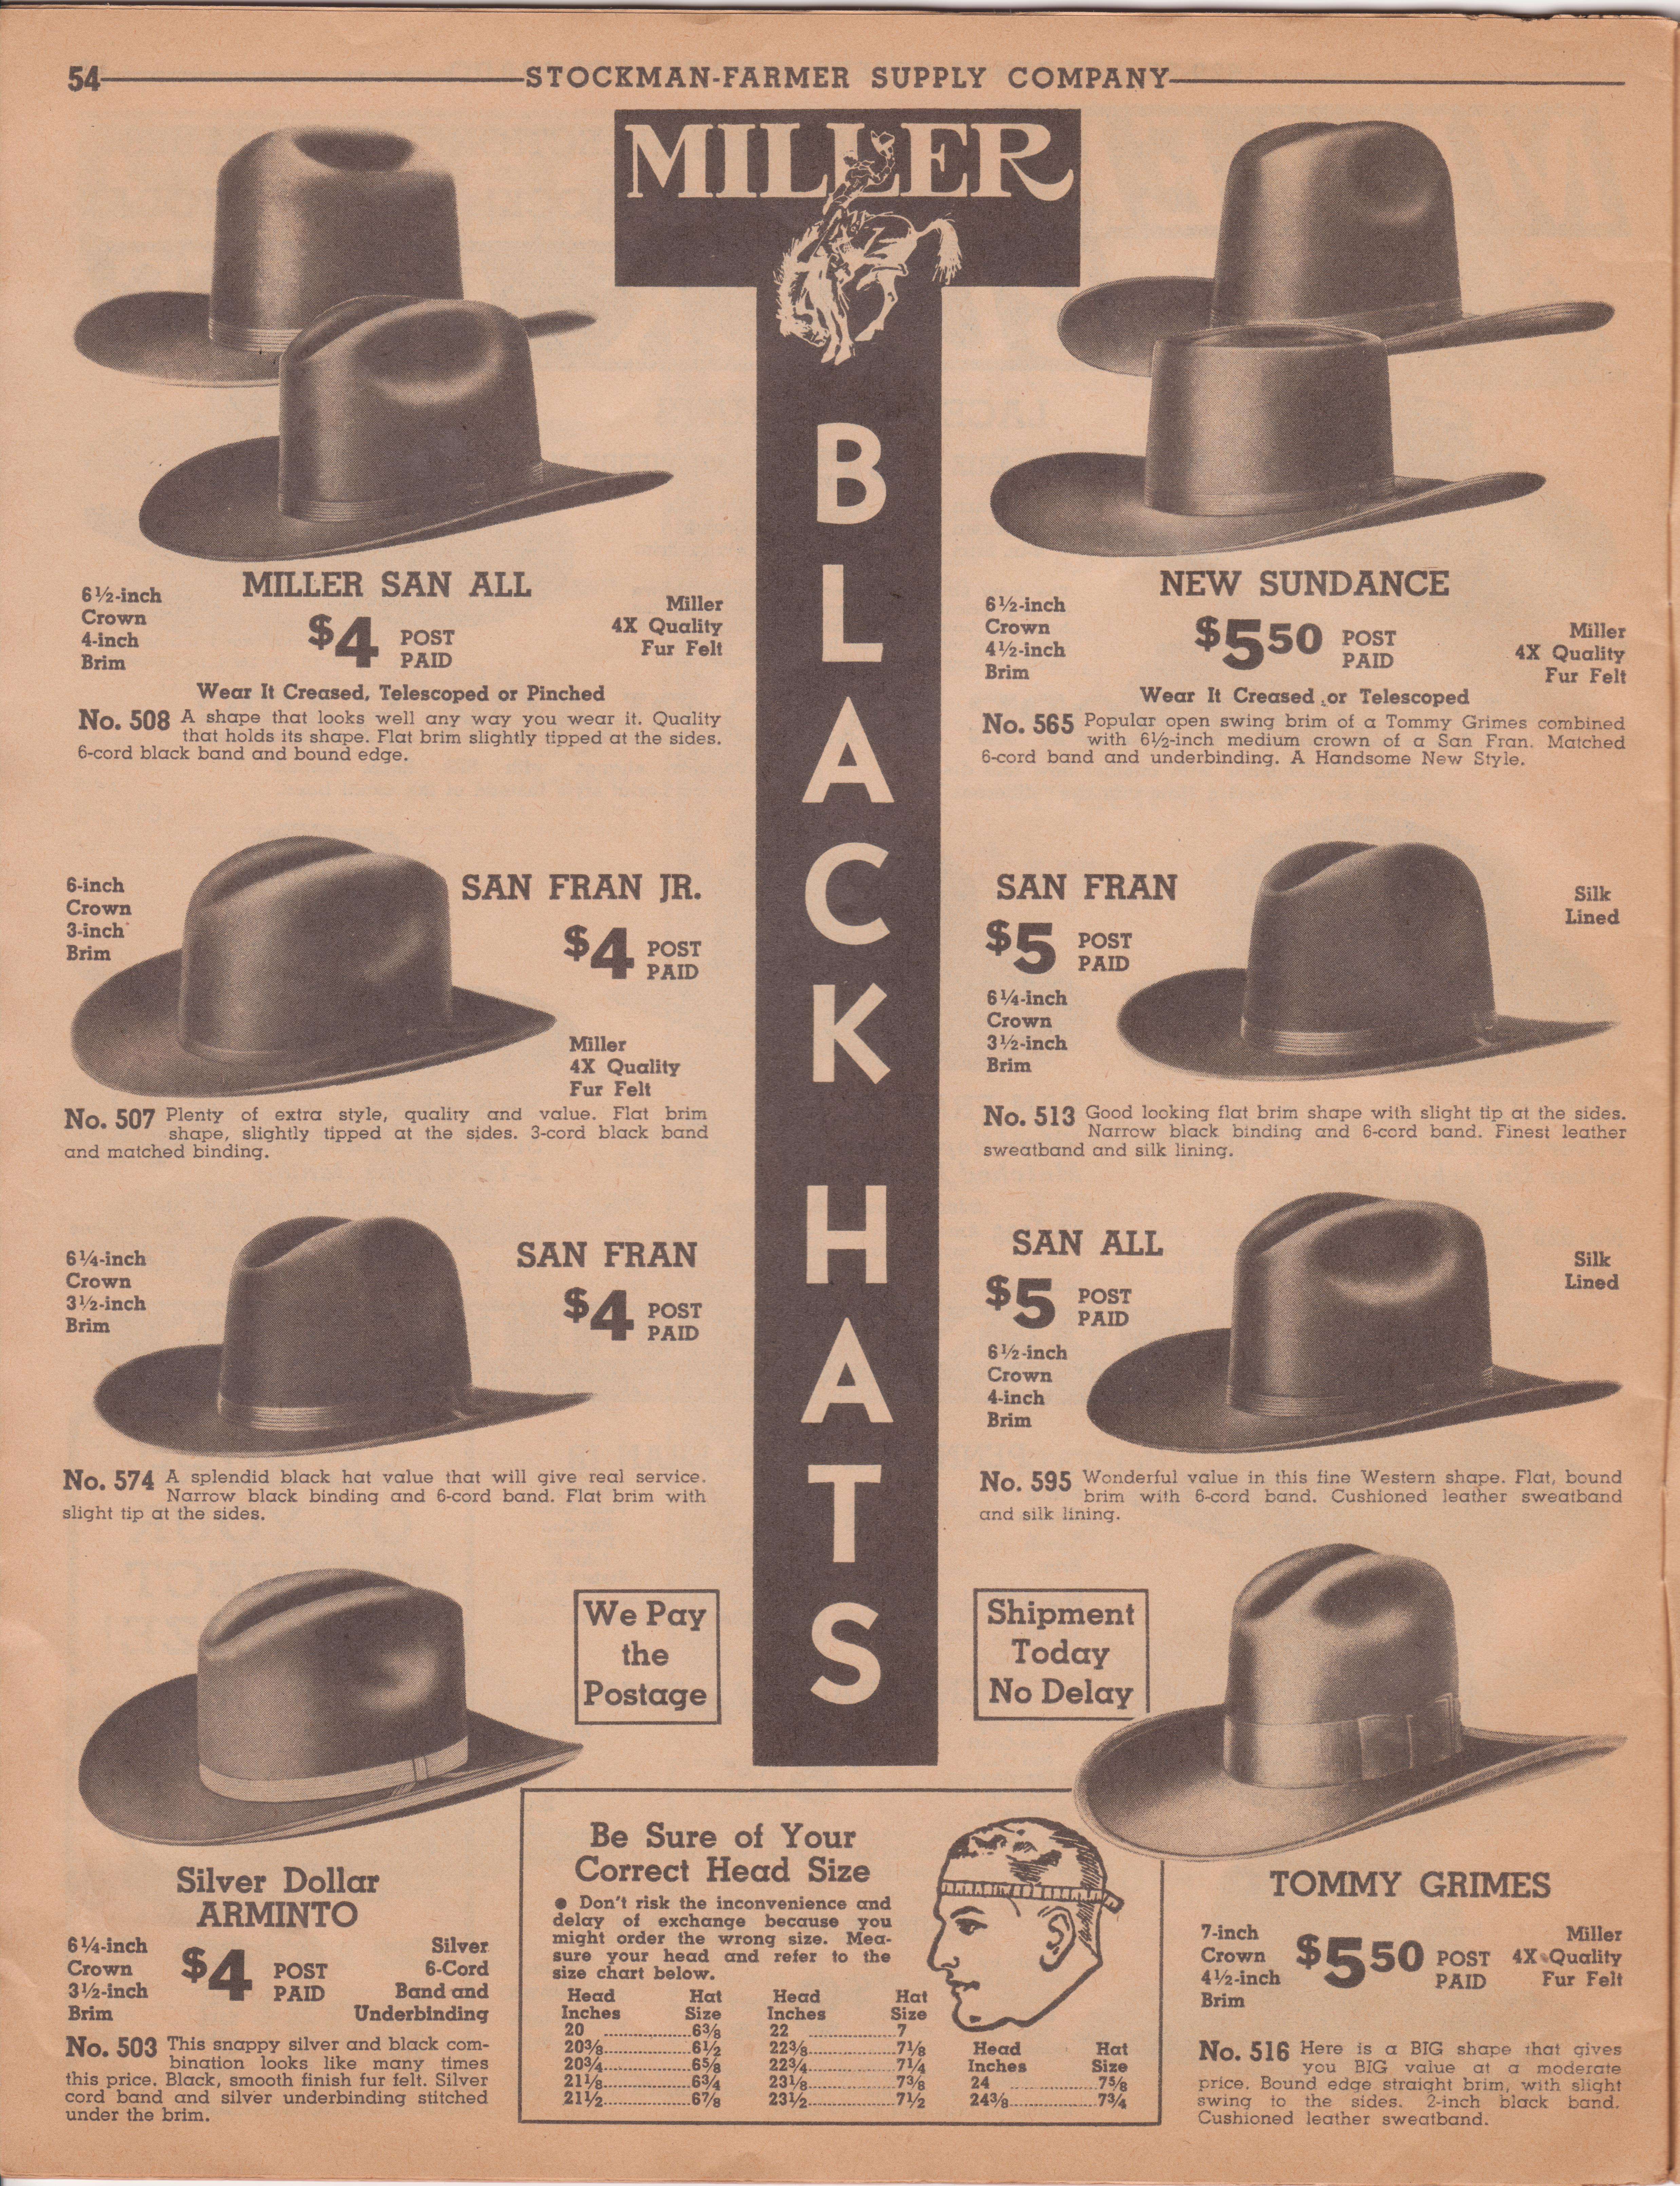 Spring-summer 1935 Stockman-Farmer cowboy clothing & supplies catalog